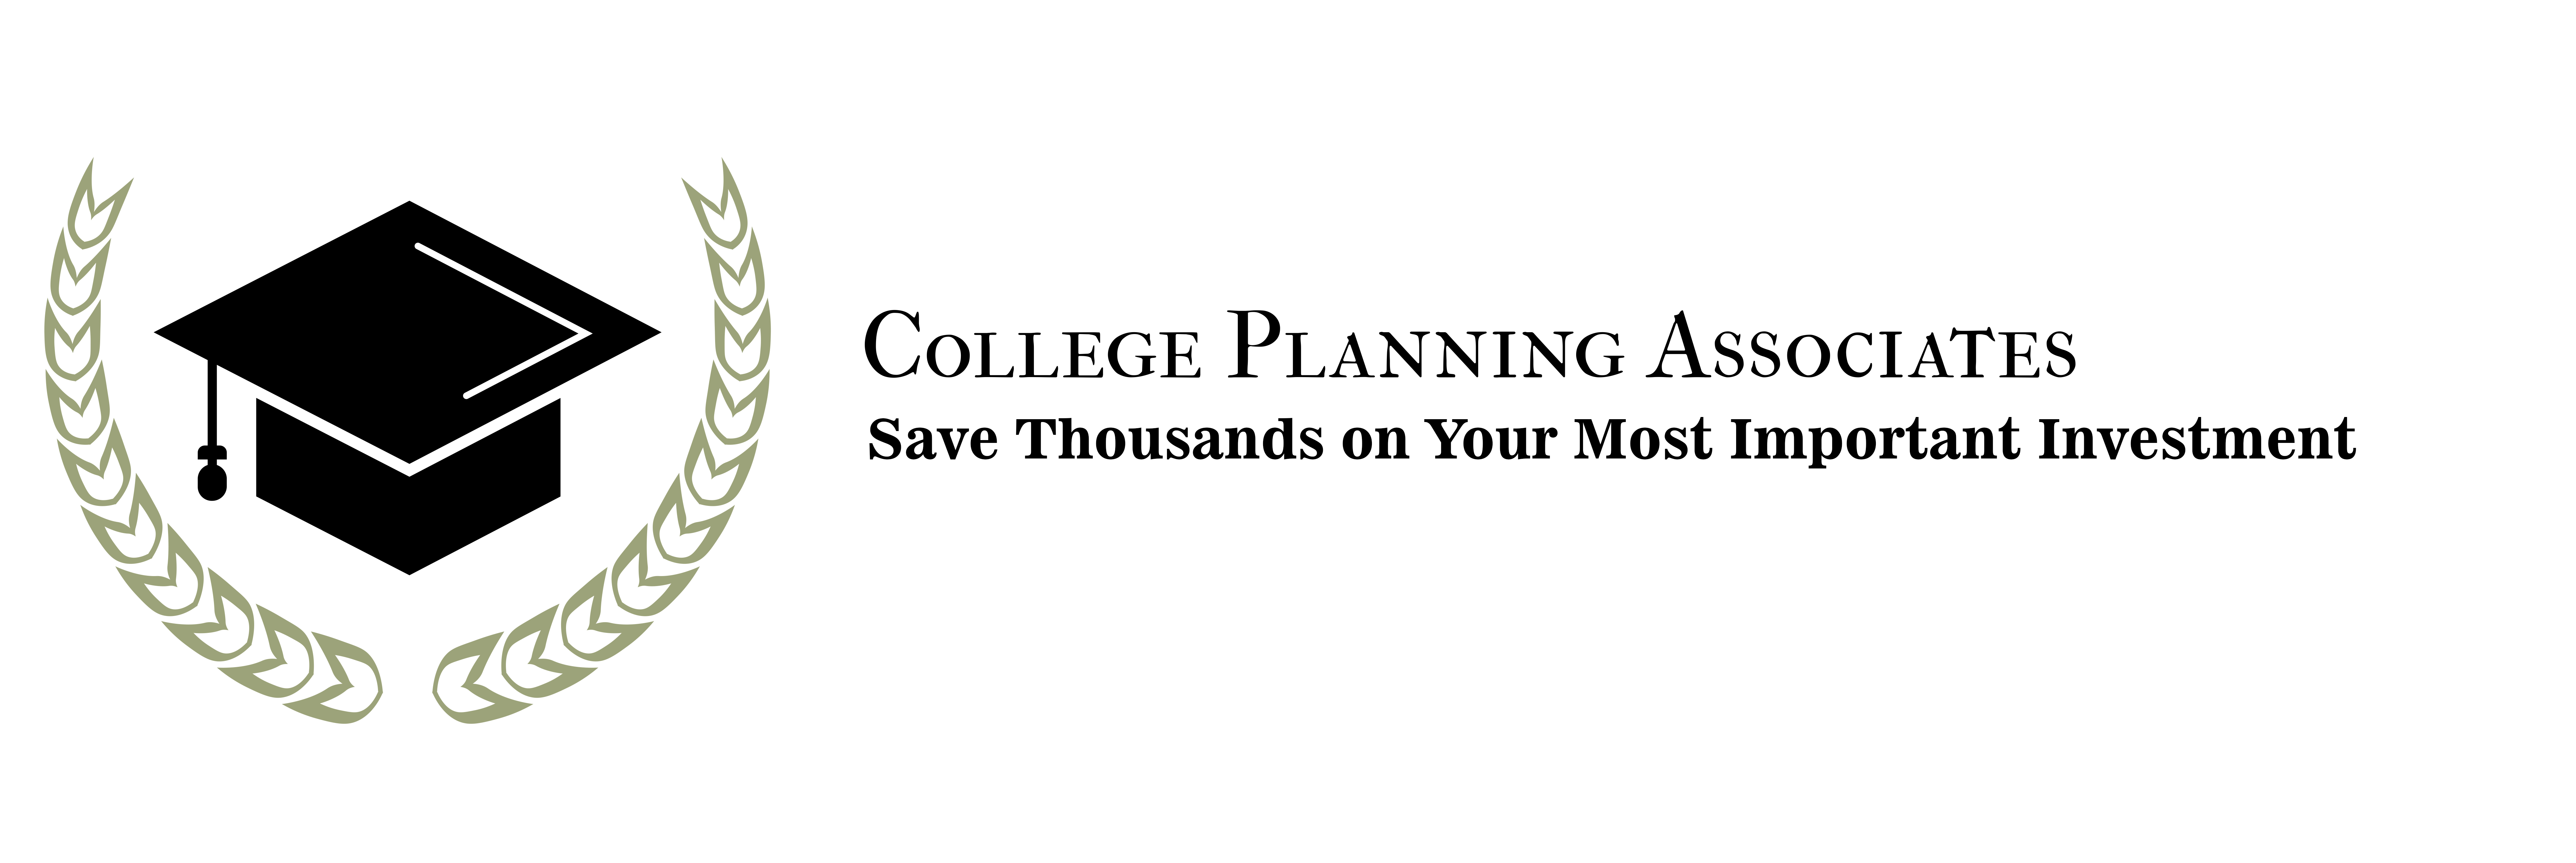 College Planning Associates